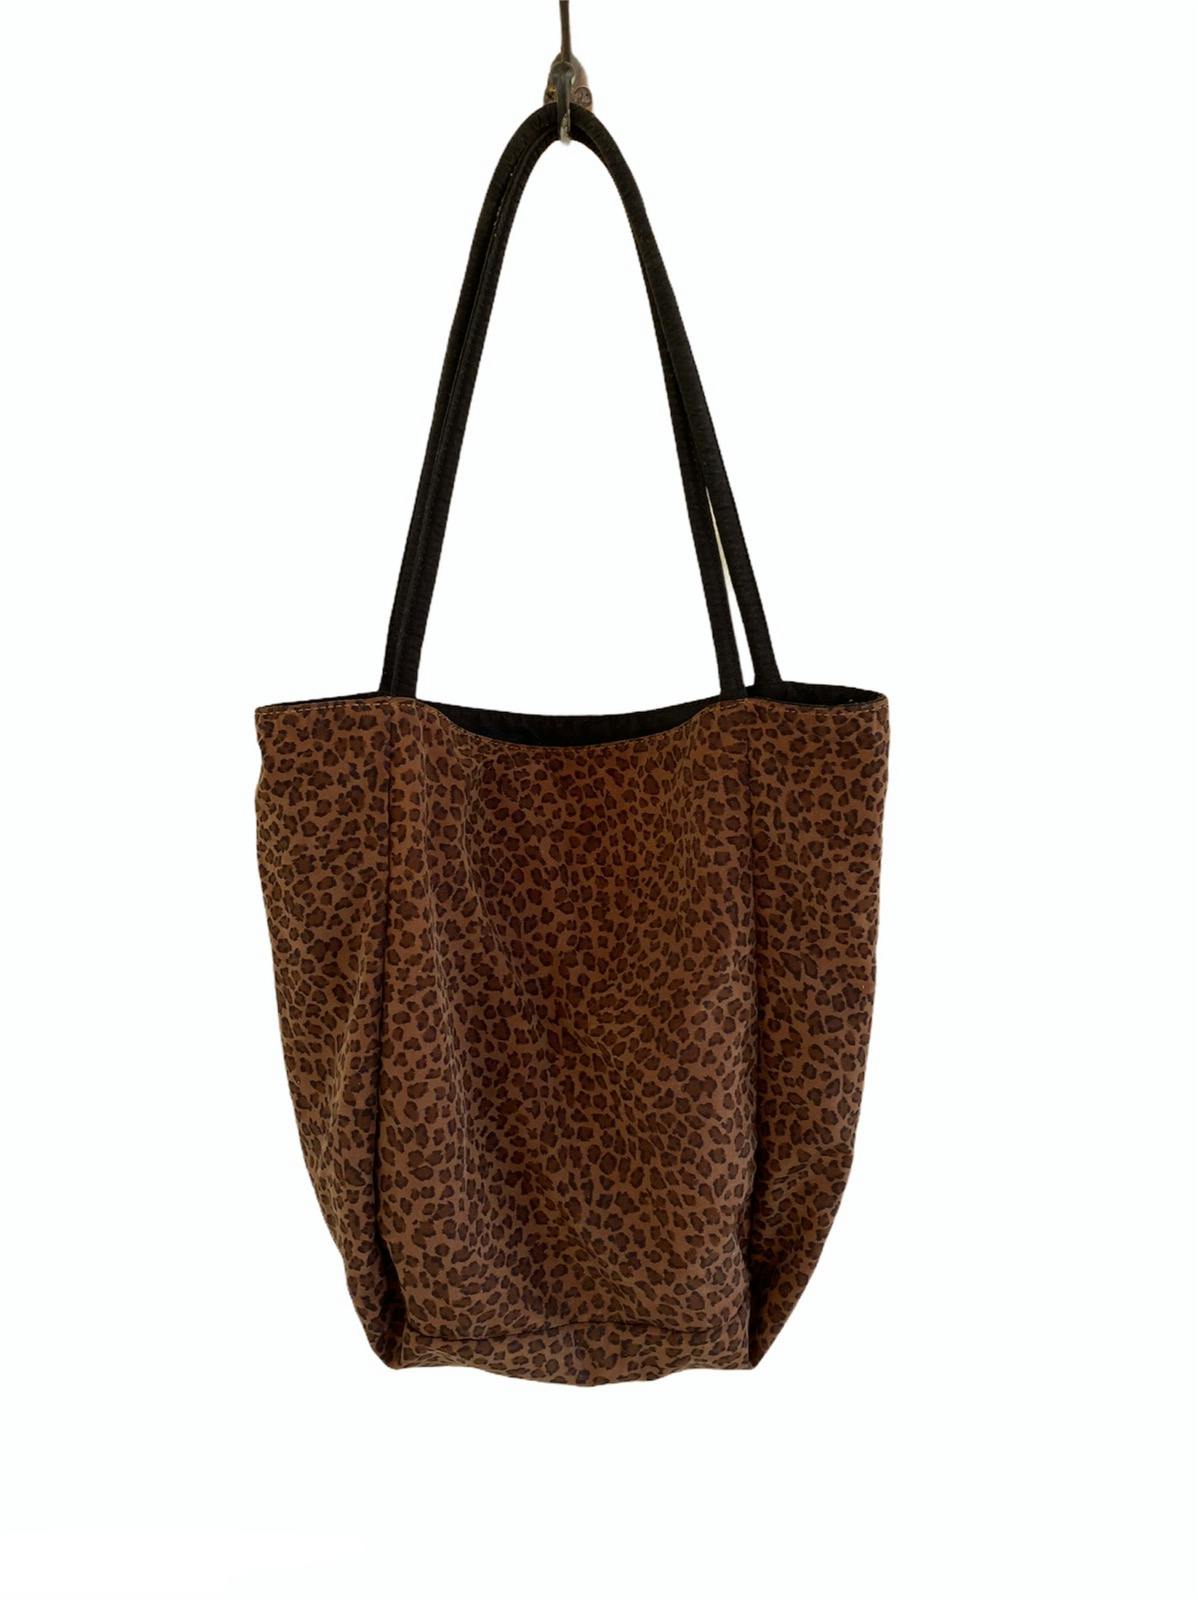 Bottega Veneta Leopard Tote Bag - 1